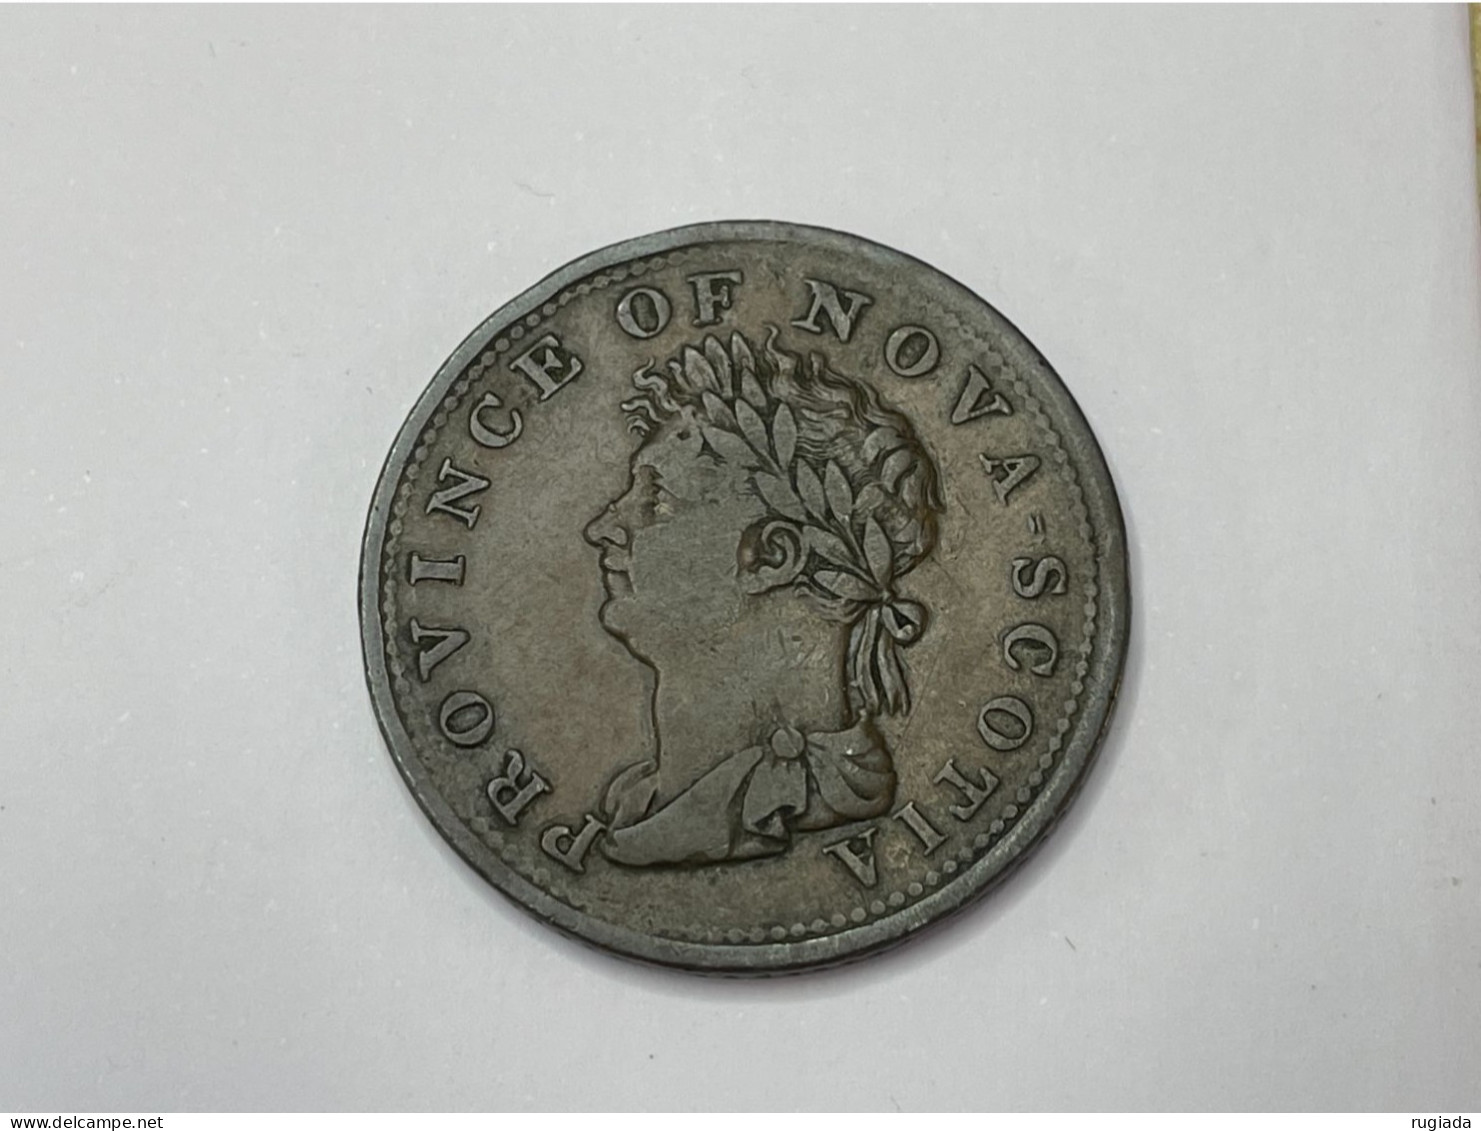 1823 Canada Nova Scotia 1/2 Half Penny, VF Very Fine - Canada